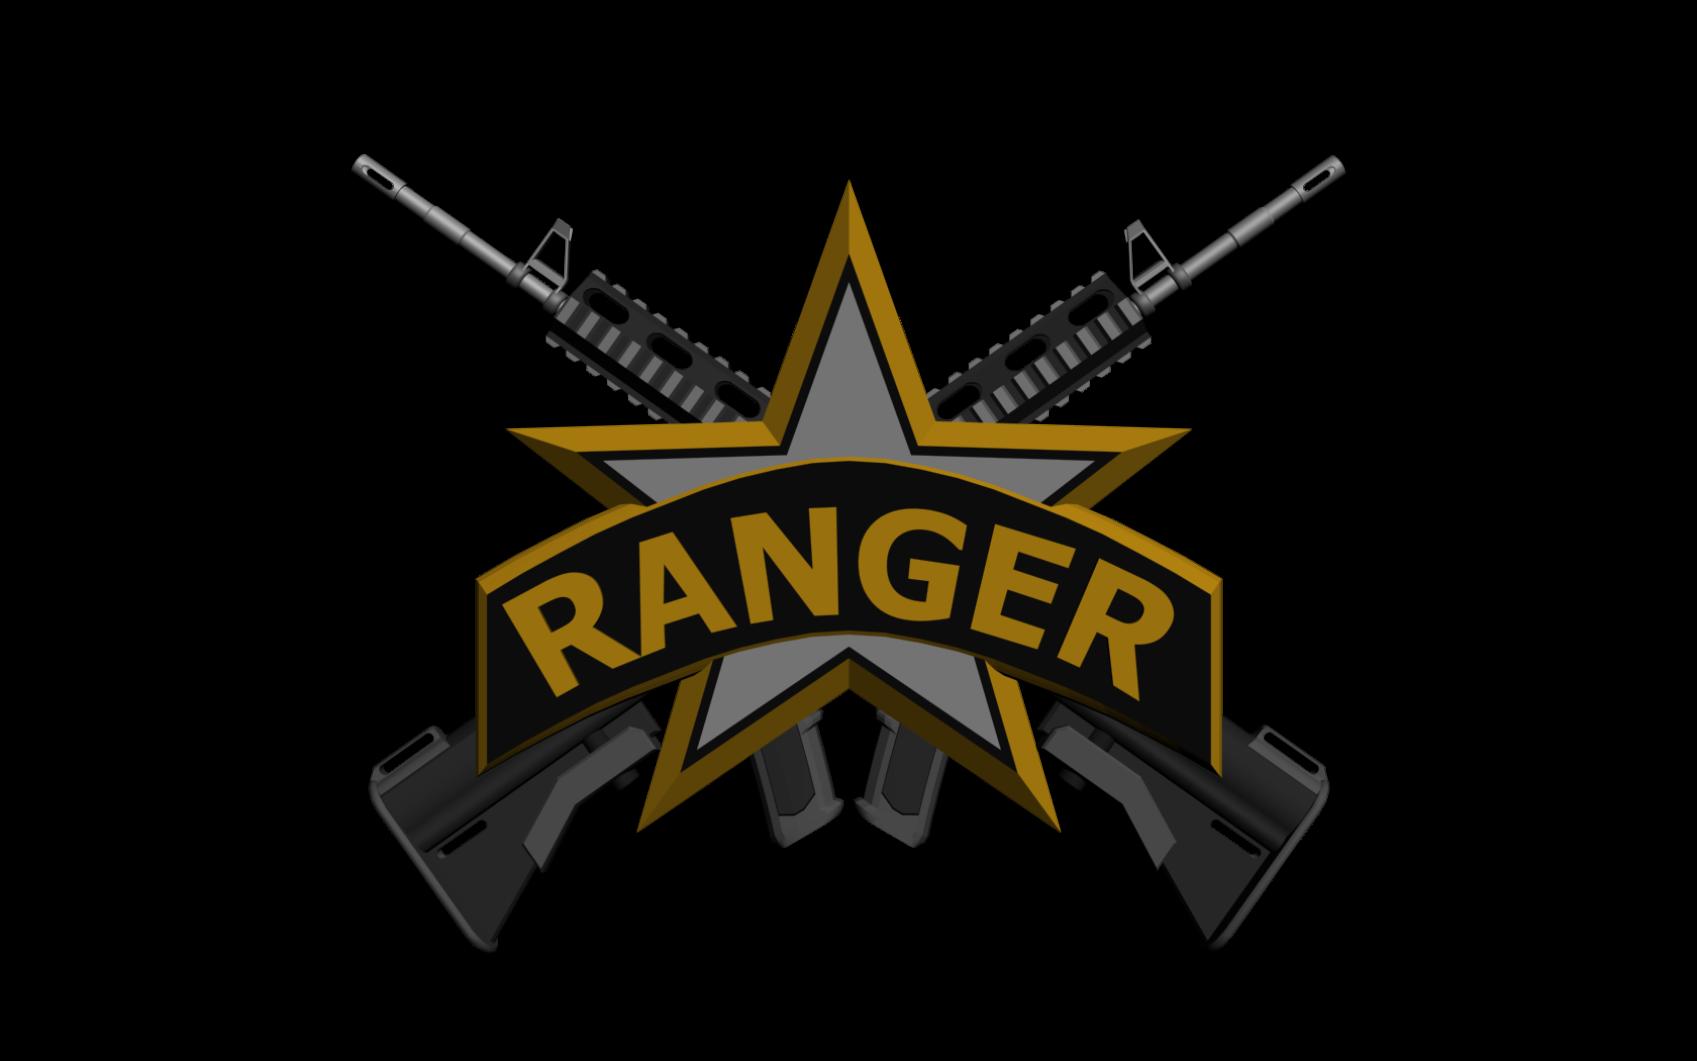 Us Army Rangers Logos - u s army rangers logo roblox